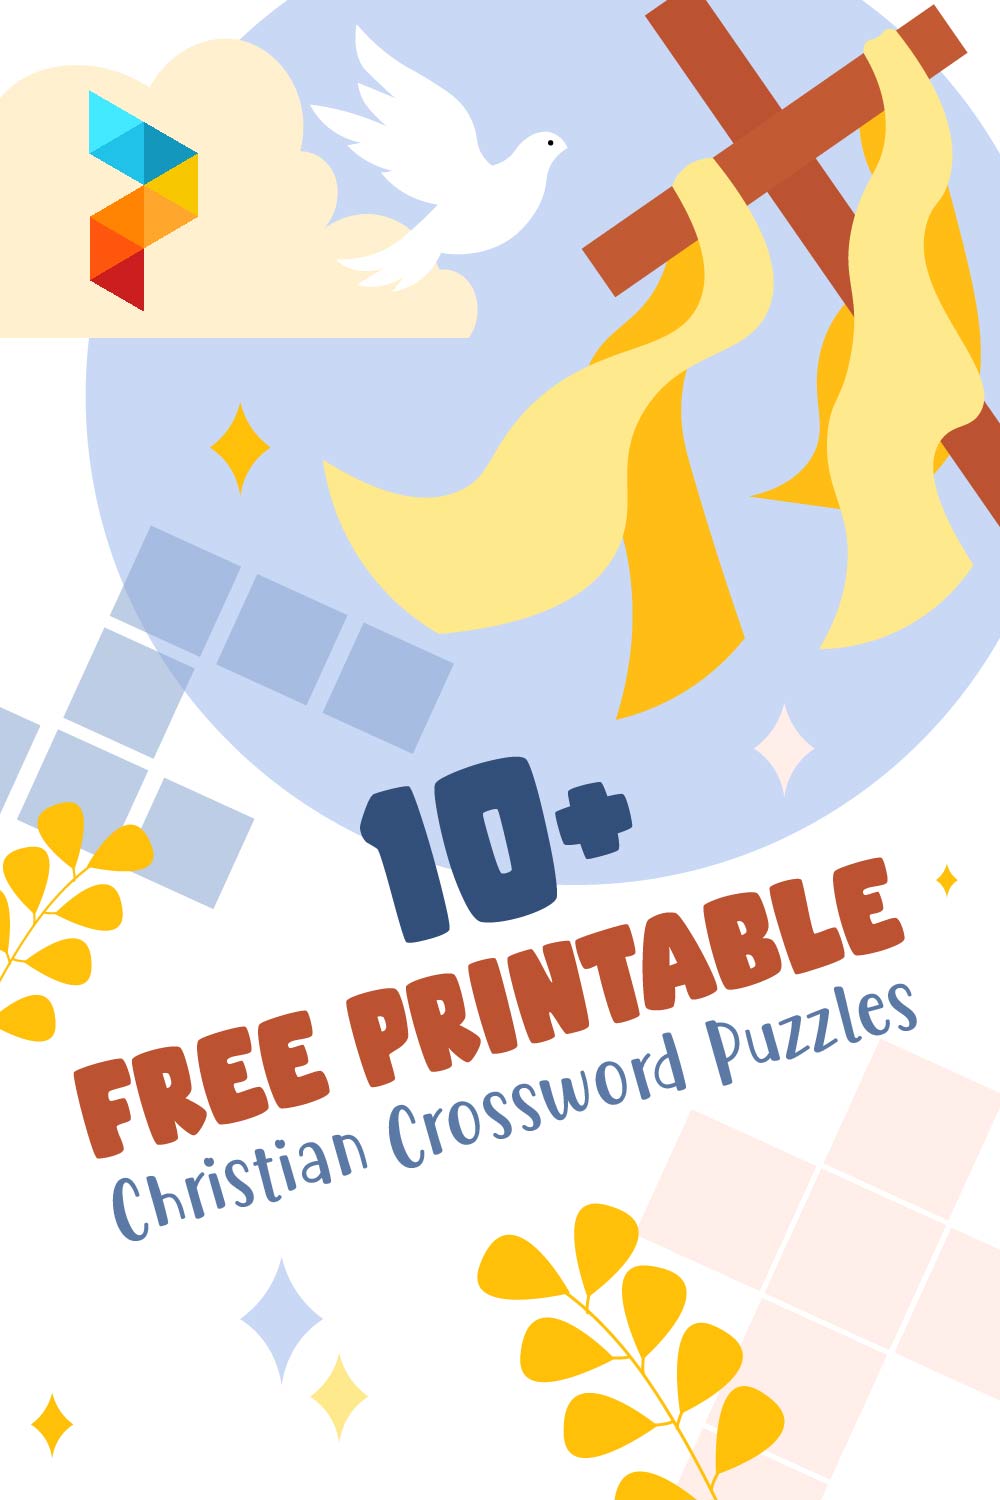 Christian Crossword Puzzles